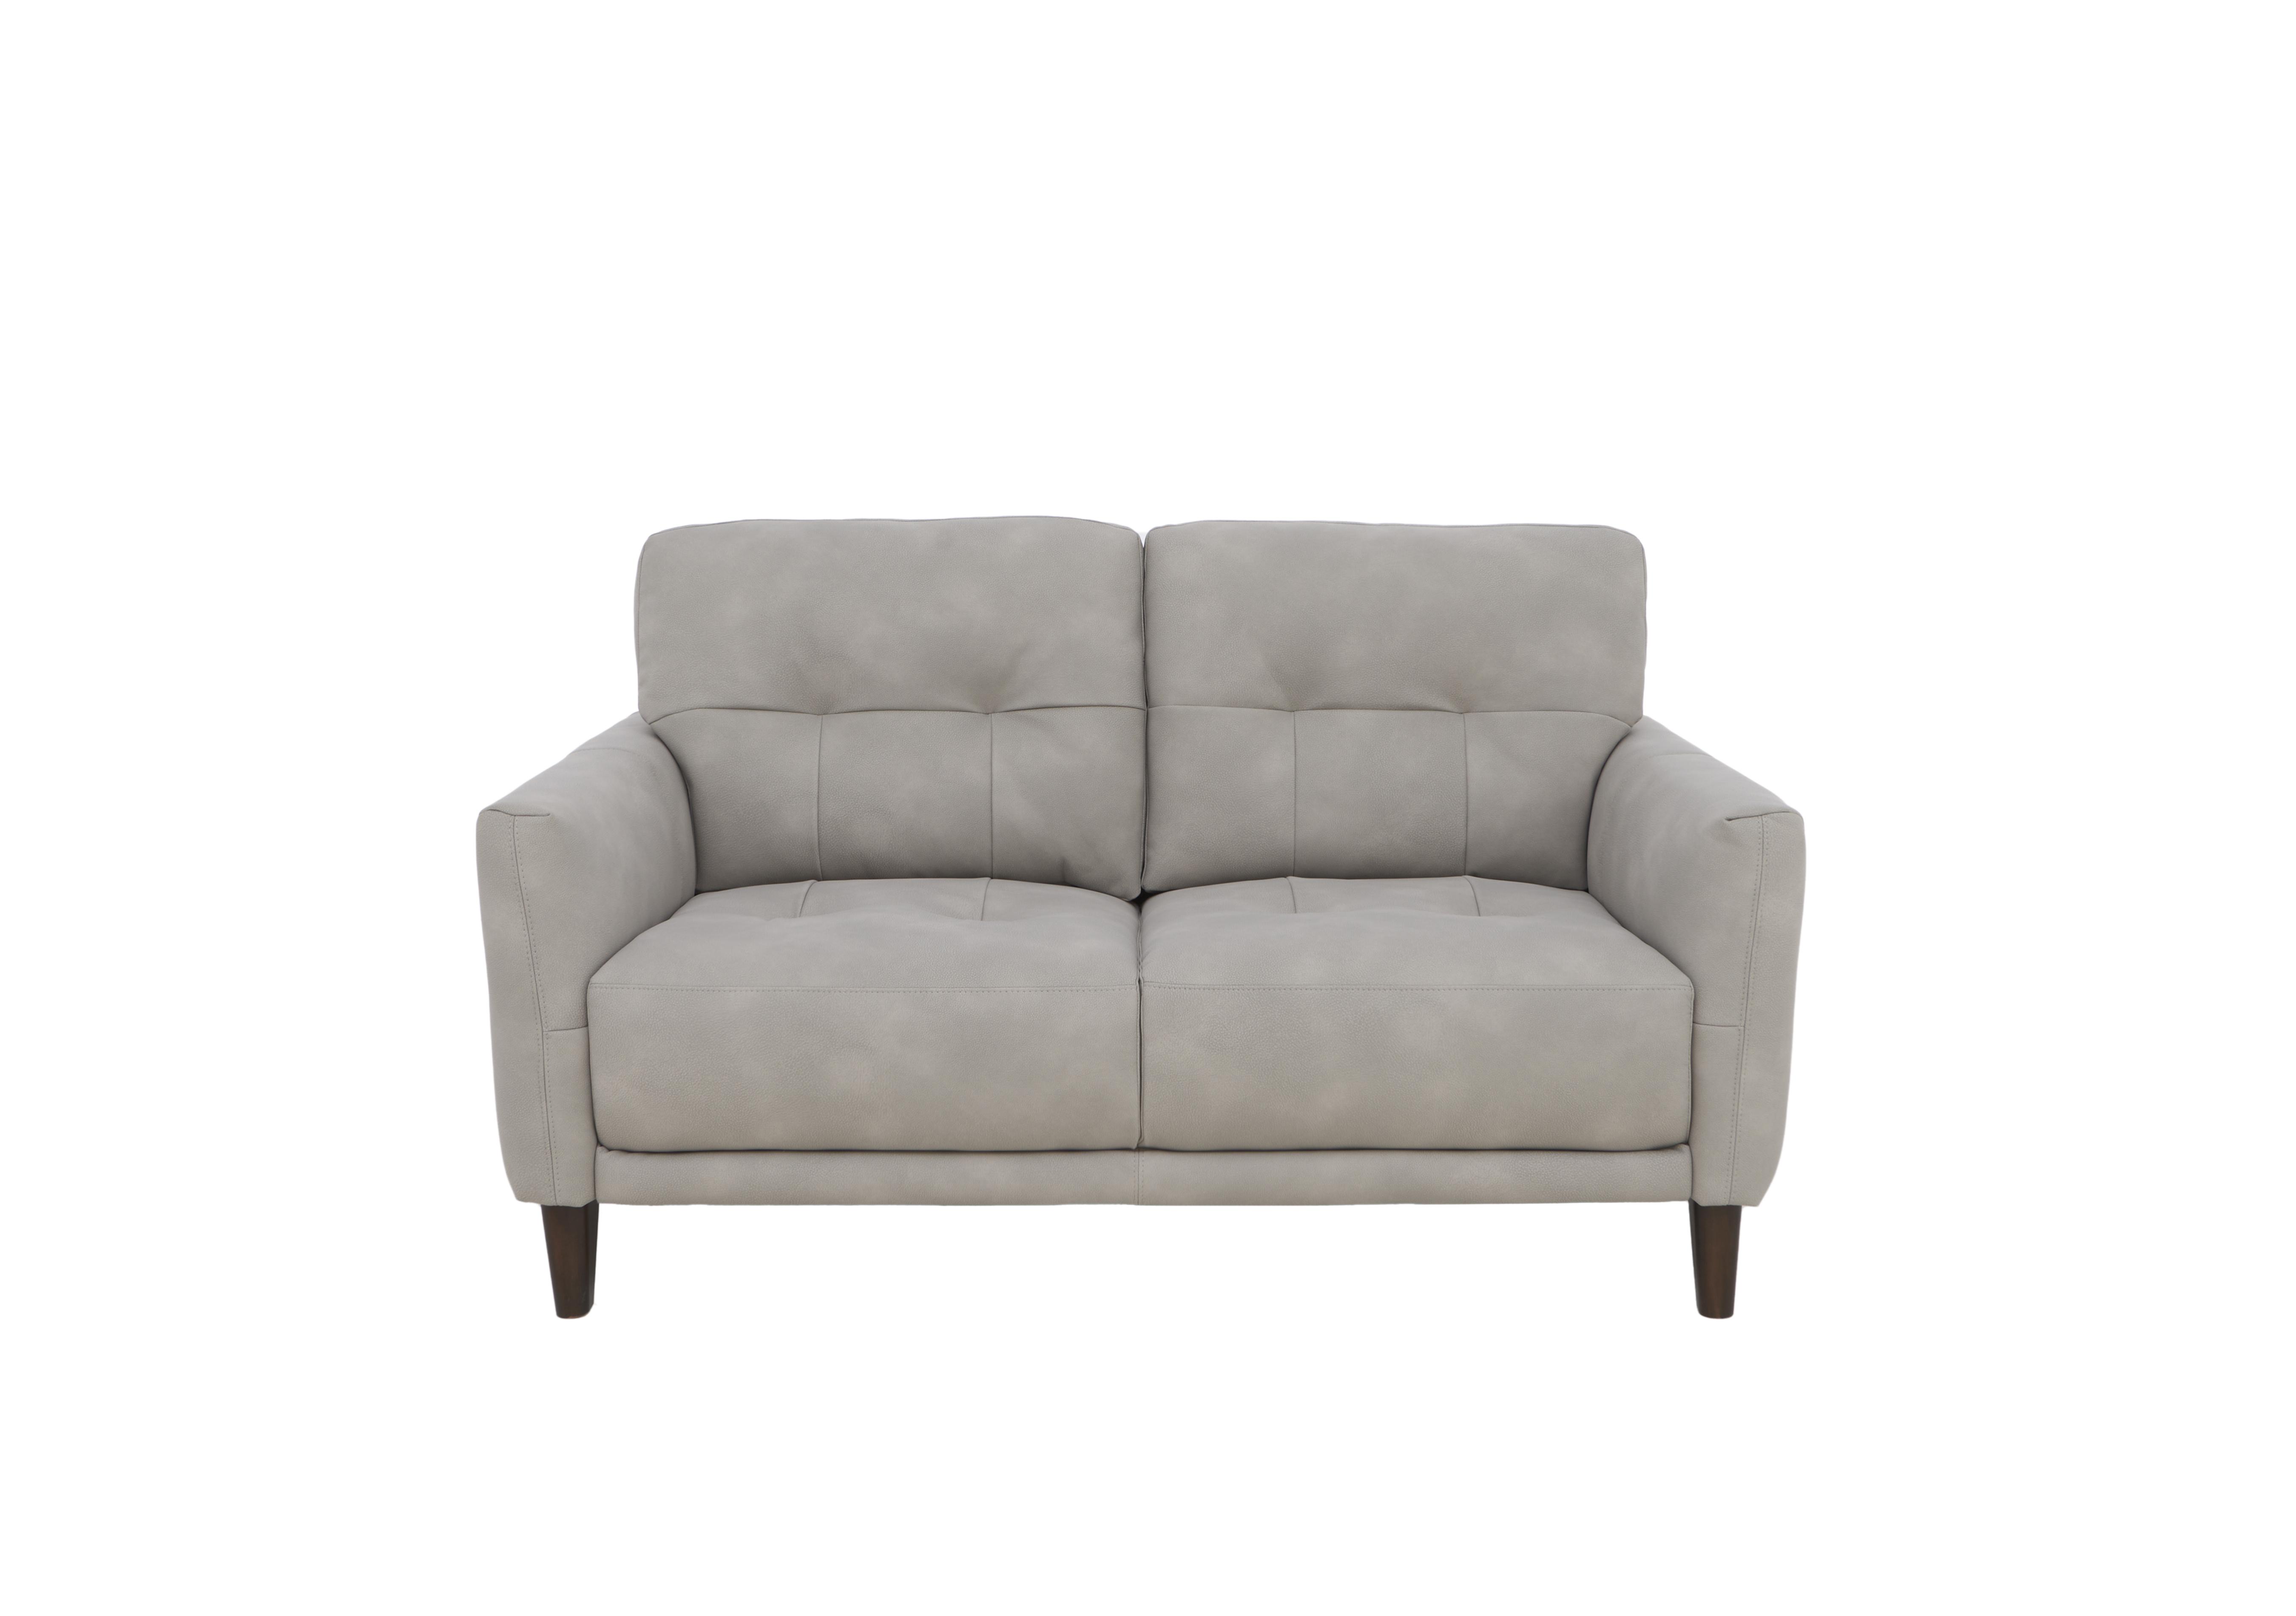 Uno Fabric 2 Seater Sofa in Bfa-Bey-R18 Beige on Furniture Village